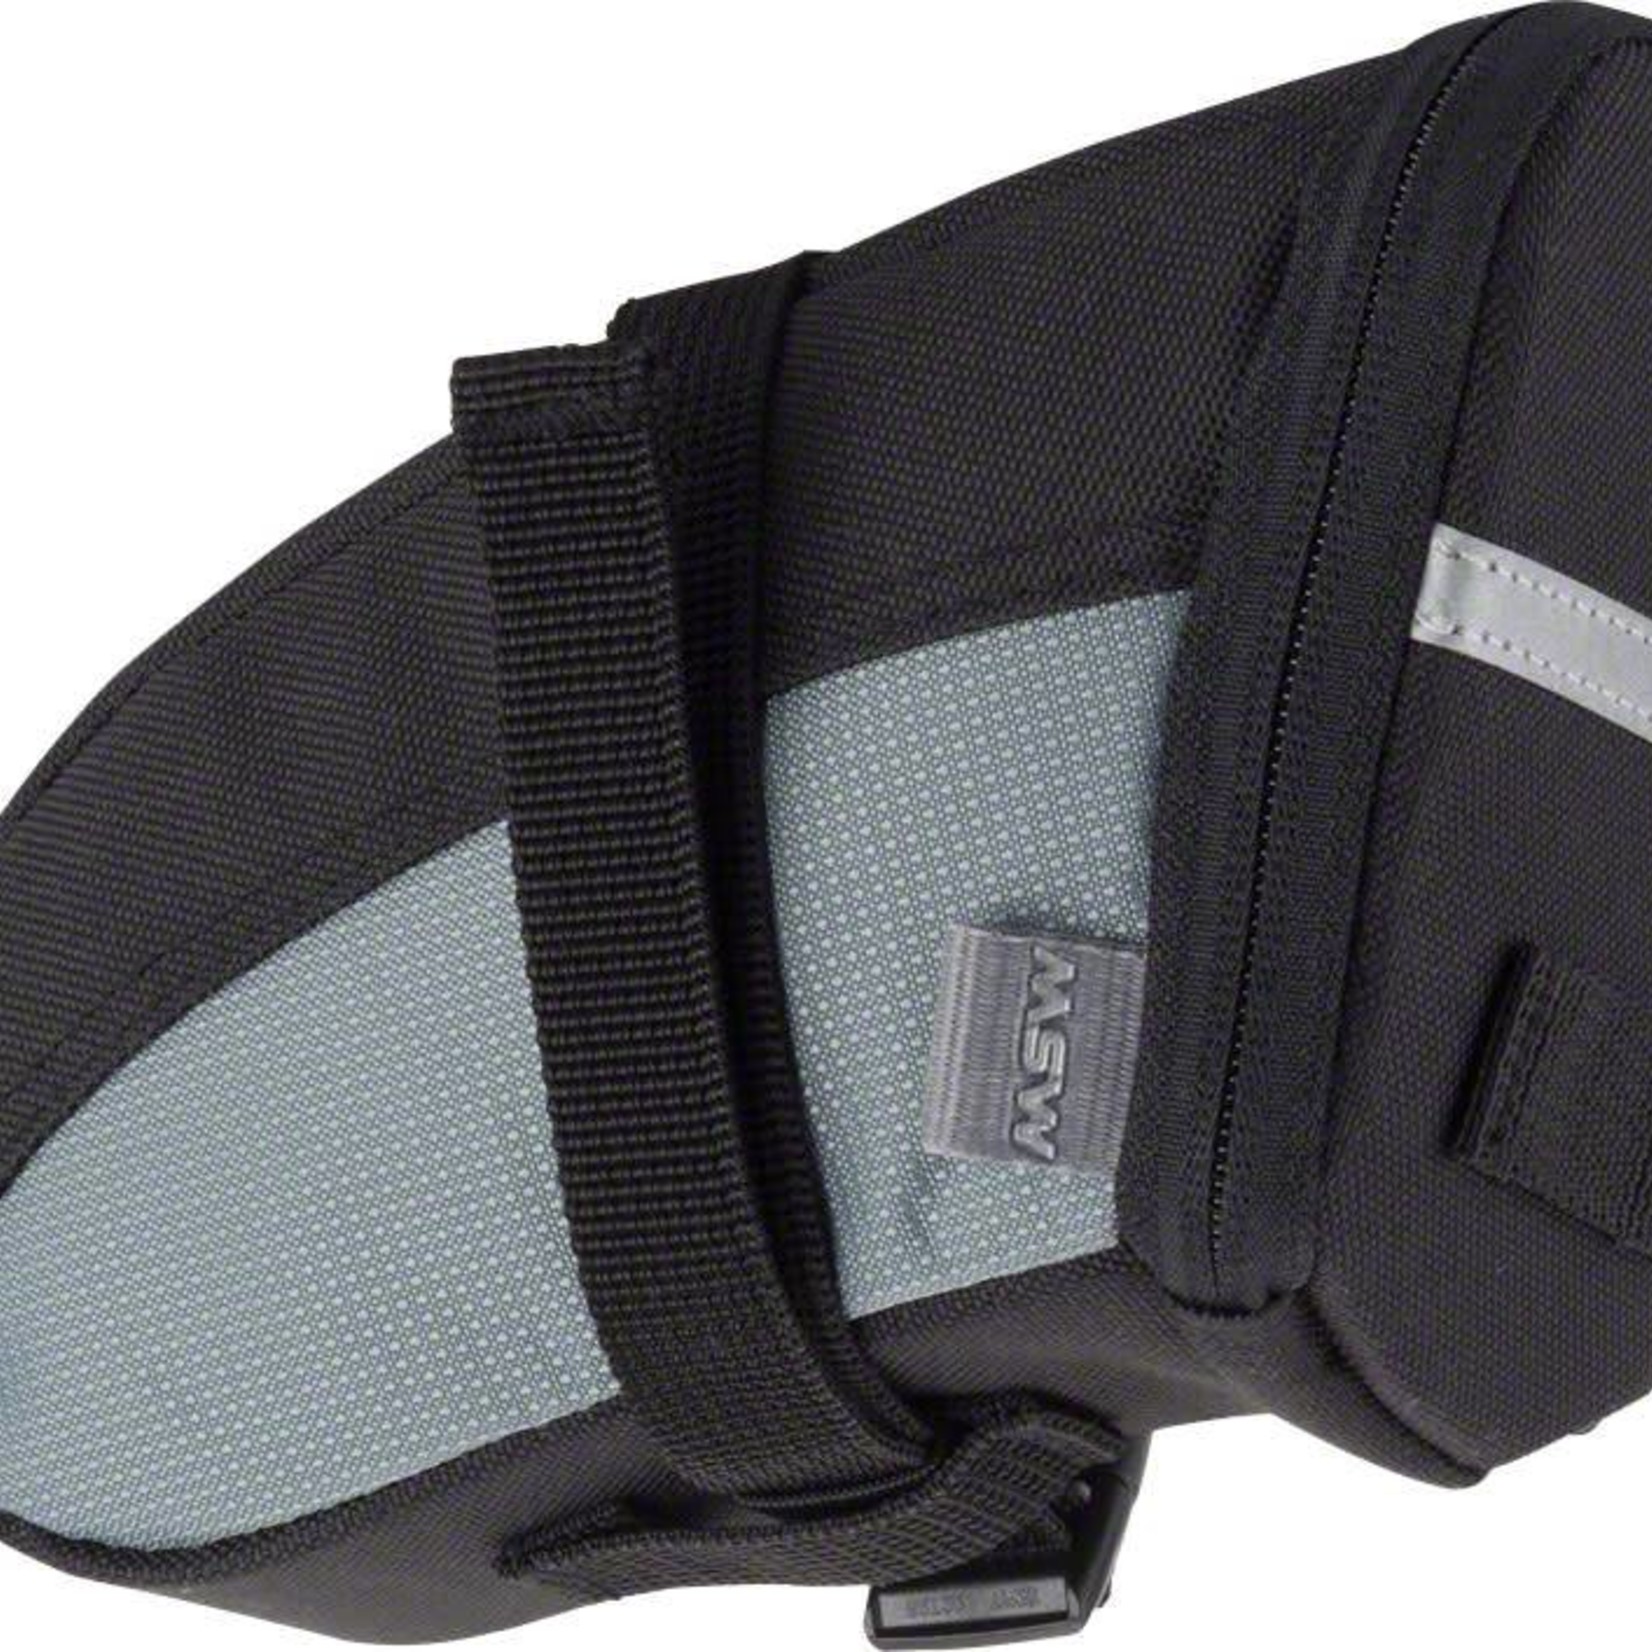 MSW MSW Brand New Bag, SBG-100 Seat Bag, Black/Gray, LG